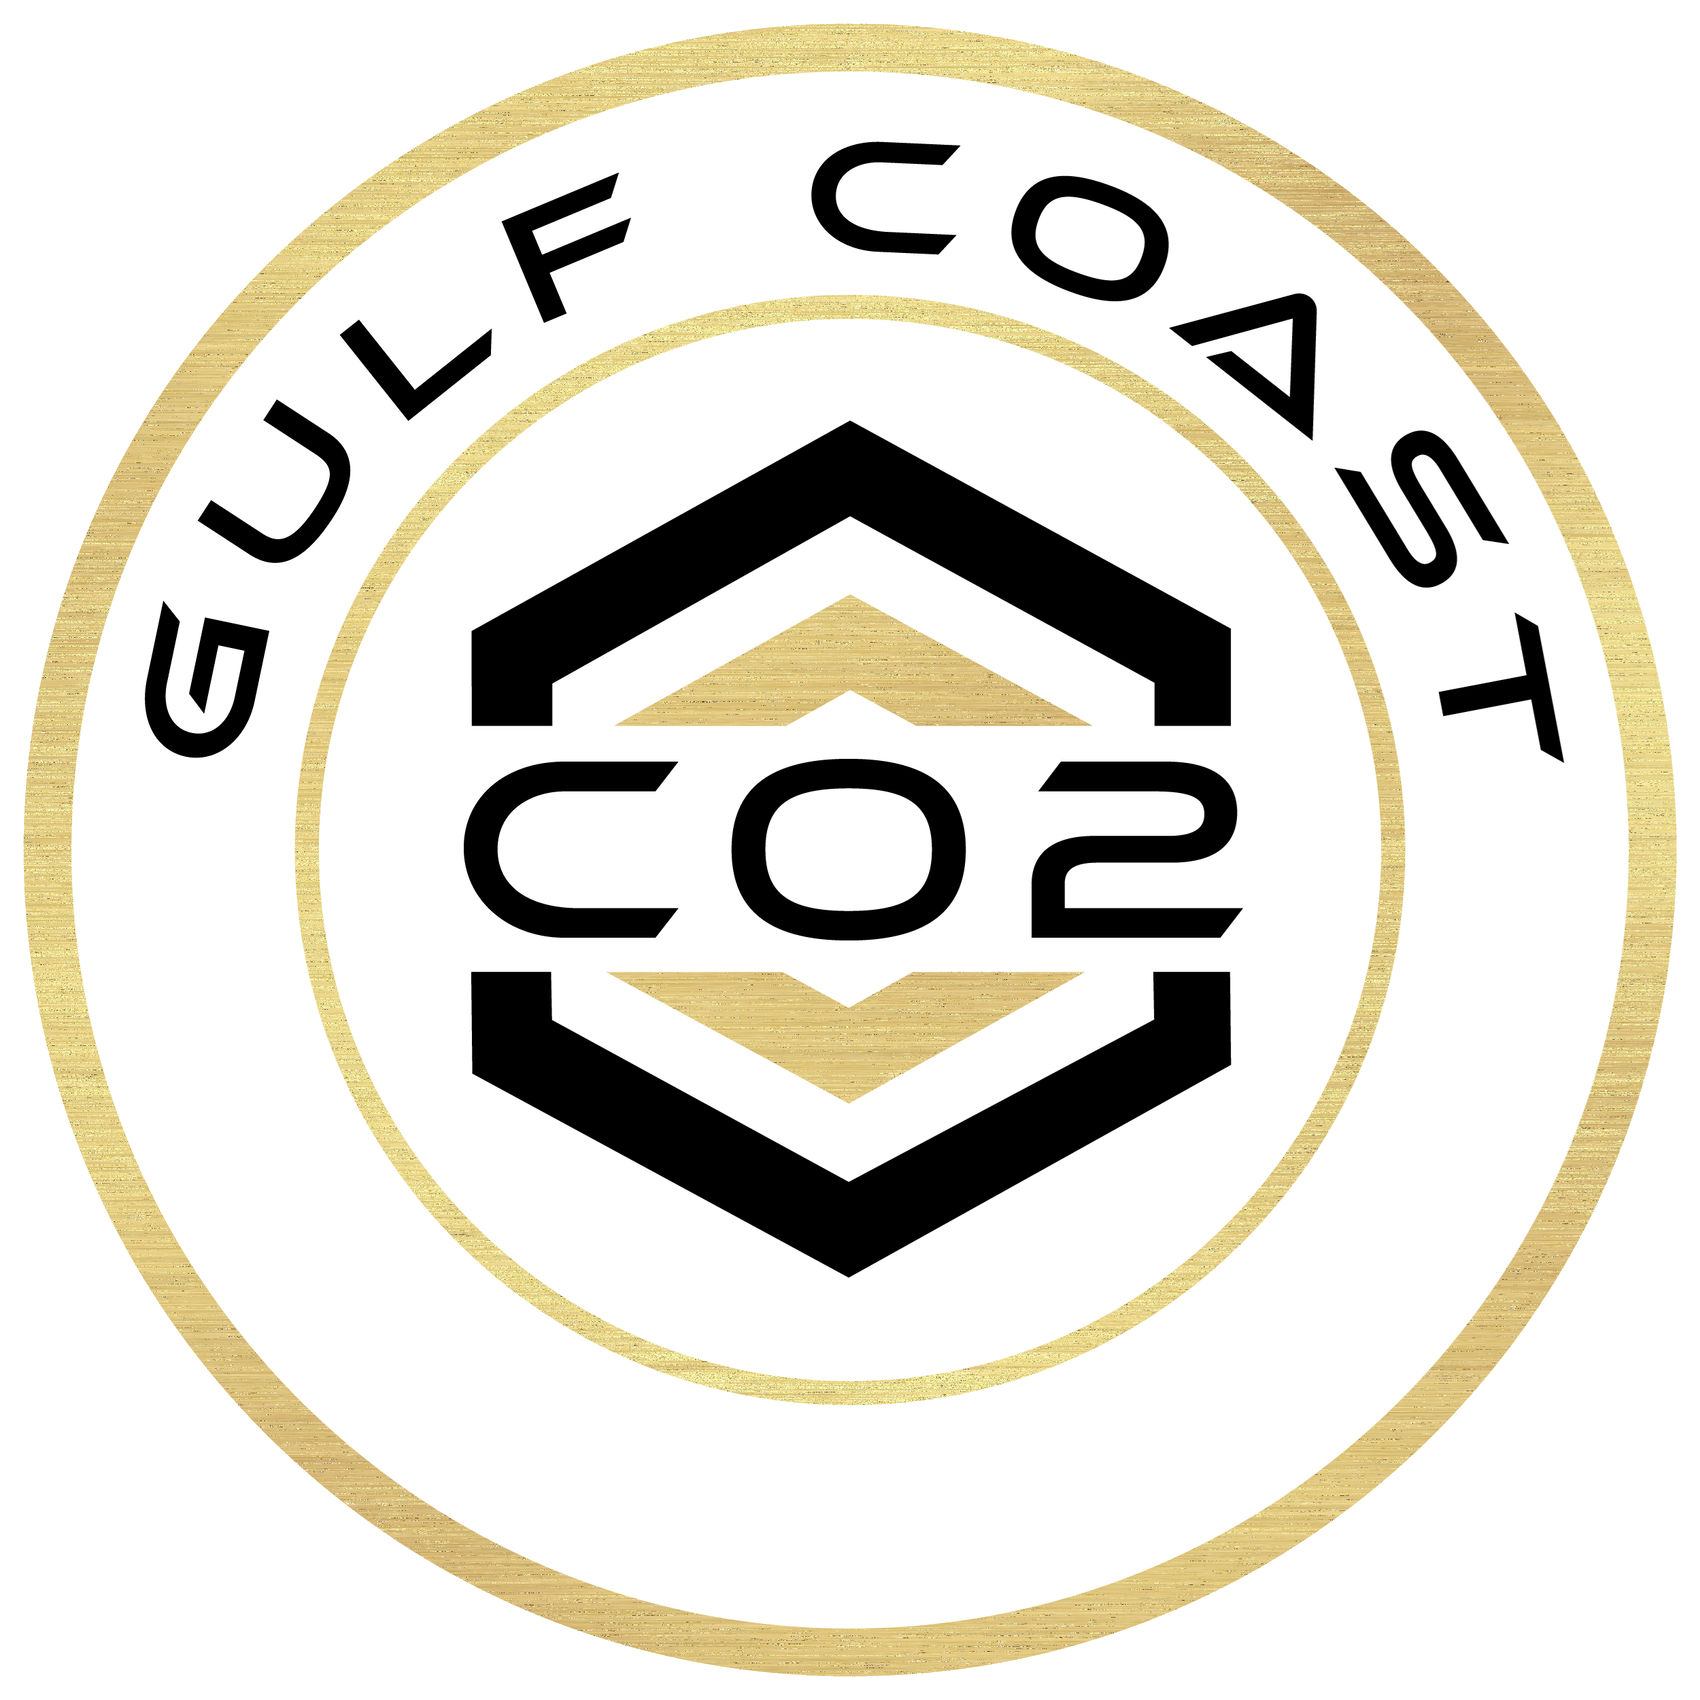 Gulf Coast Co2 Engineering